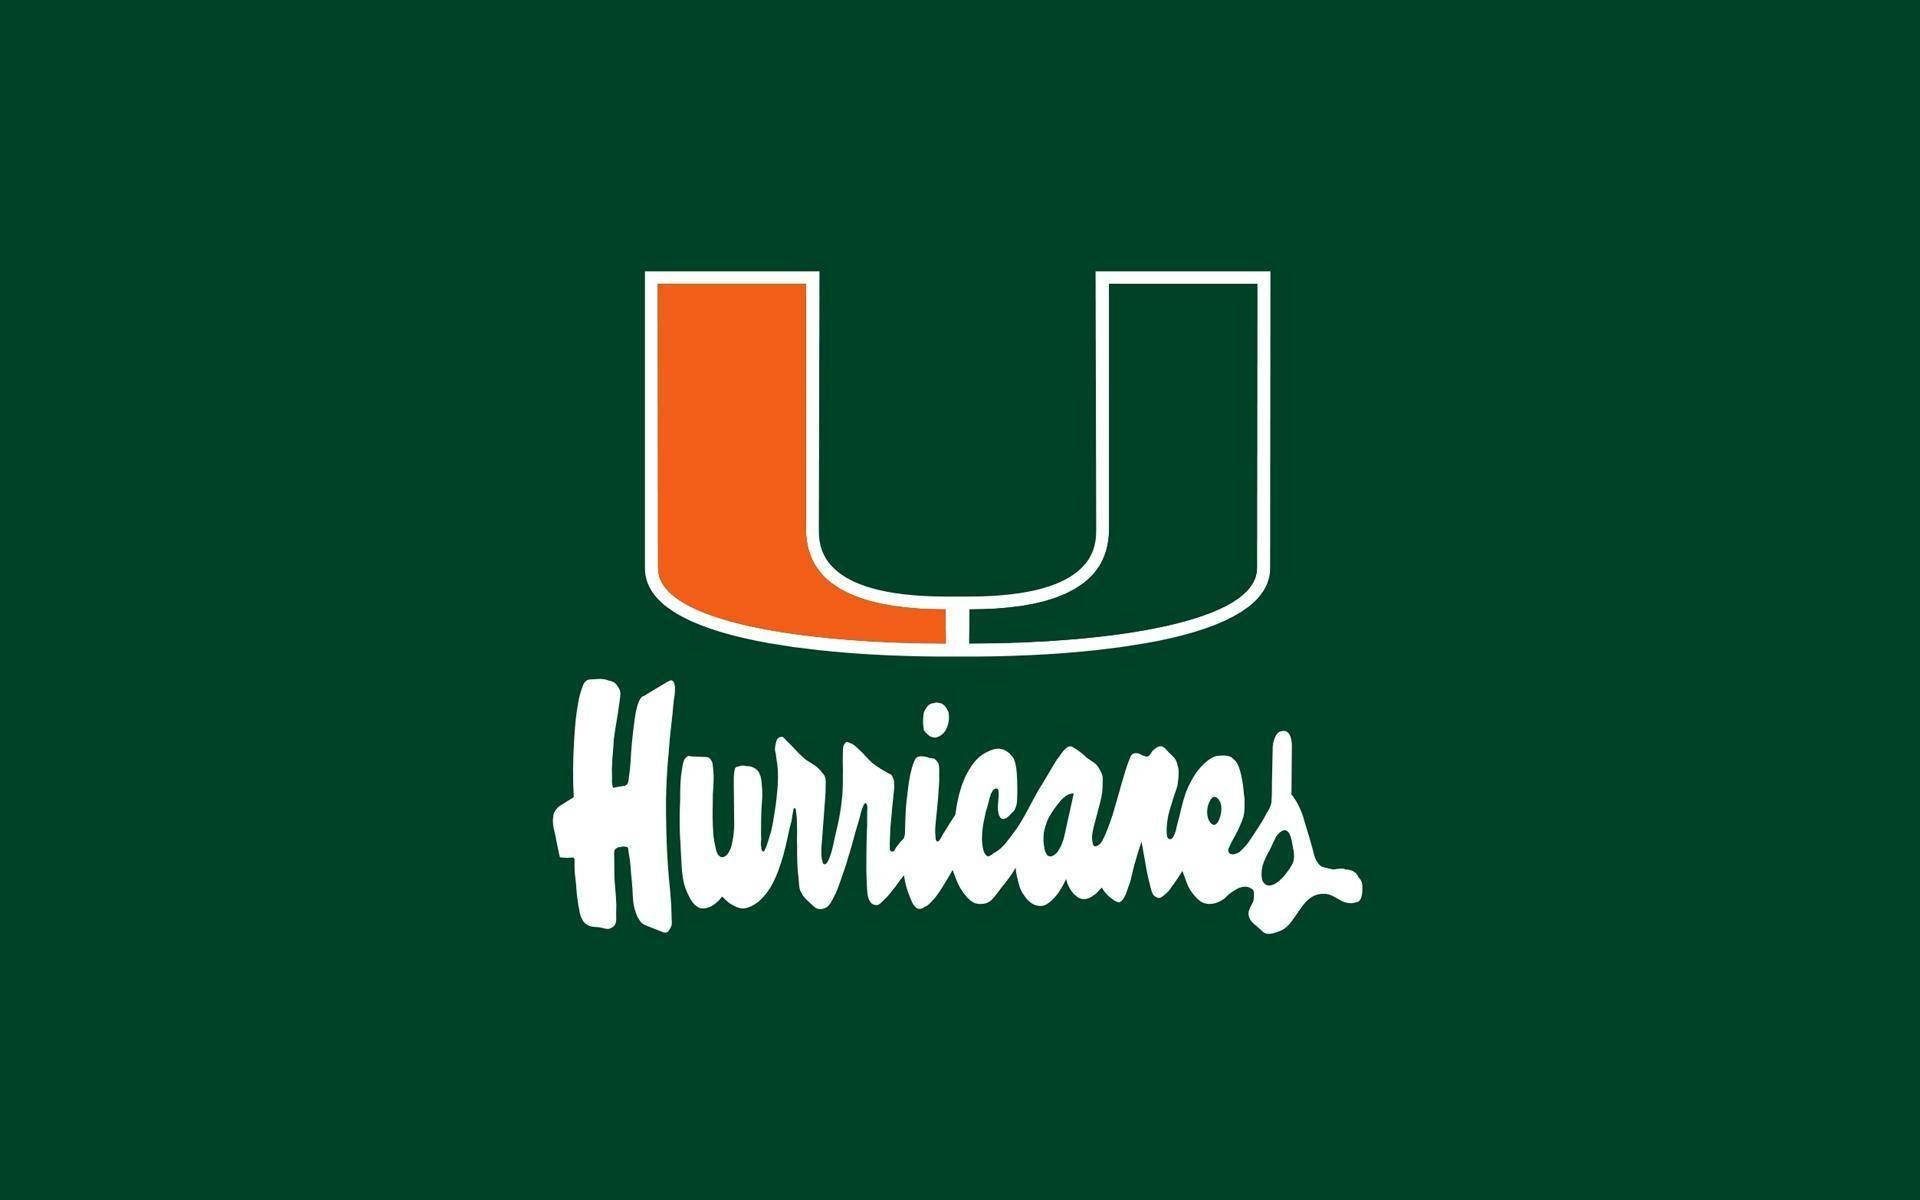 Universitätvon Miami Logo Mit Text Wallpaper